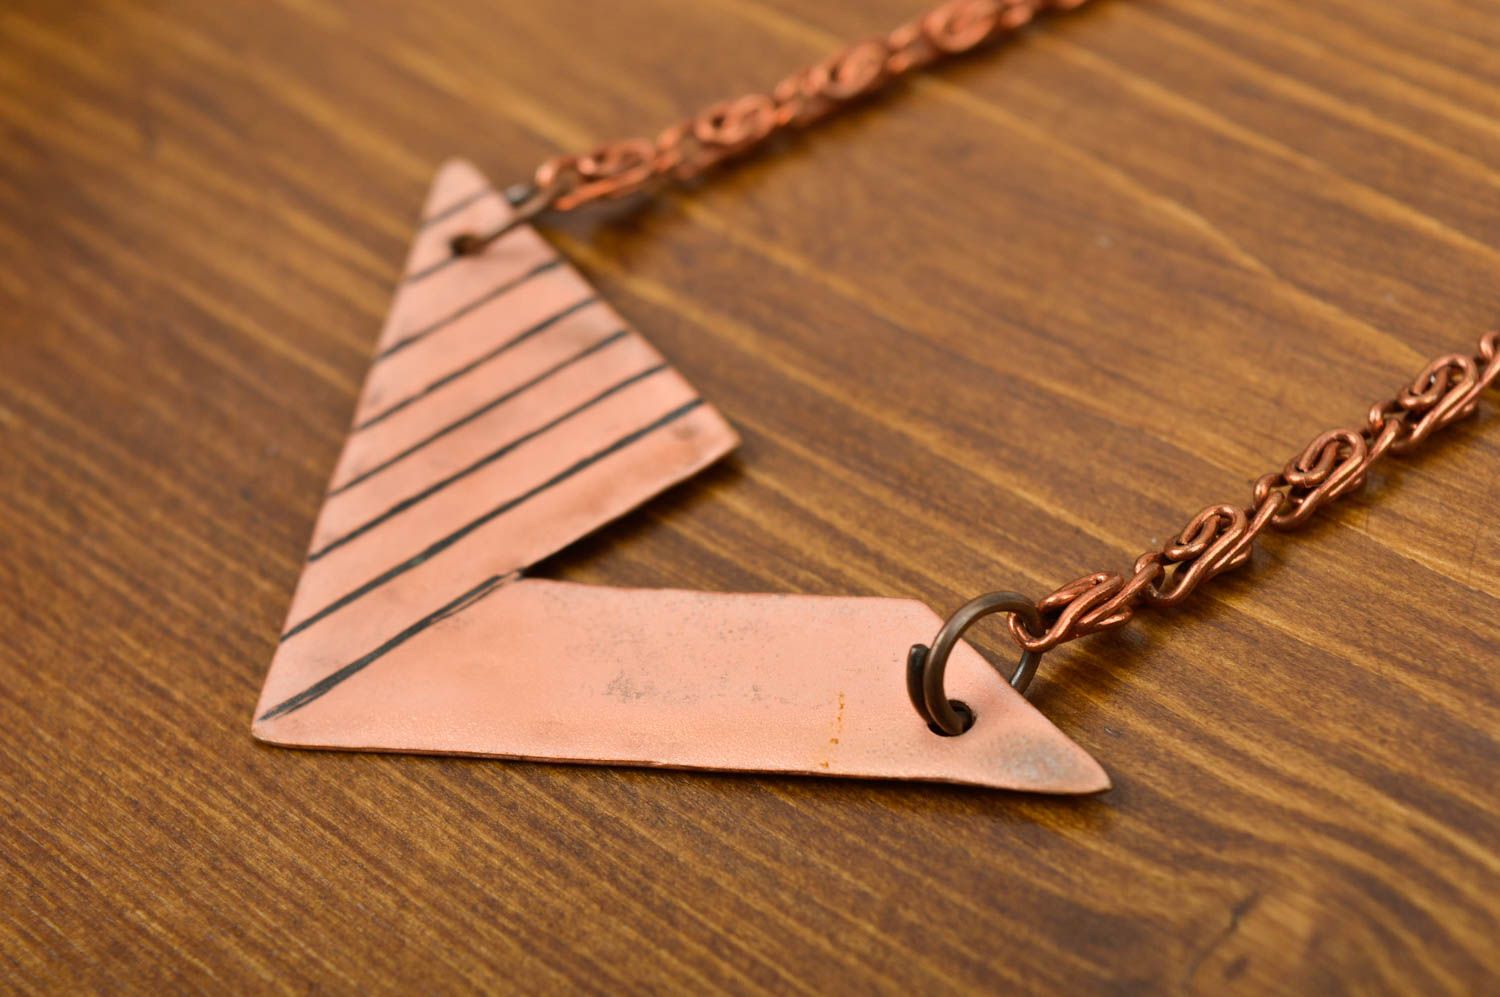 Handmade copper female pendant stylish metal pendant elegant jewelry gift ideas photo 2